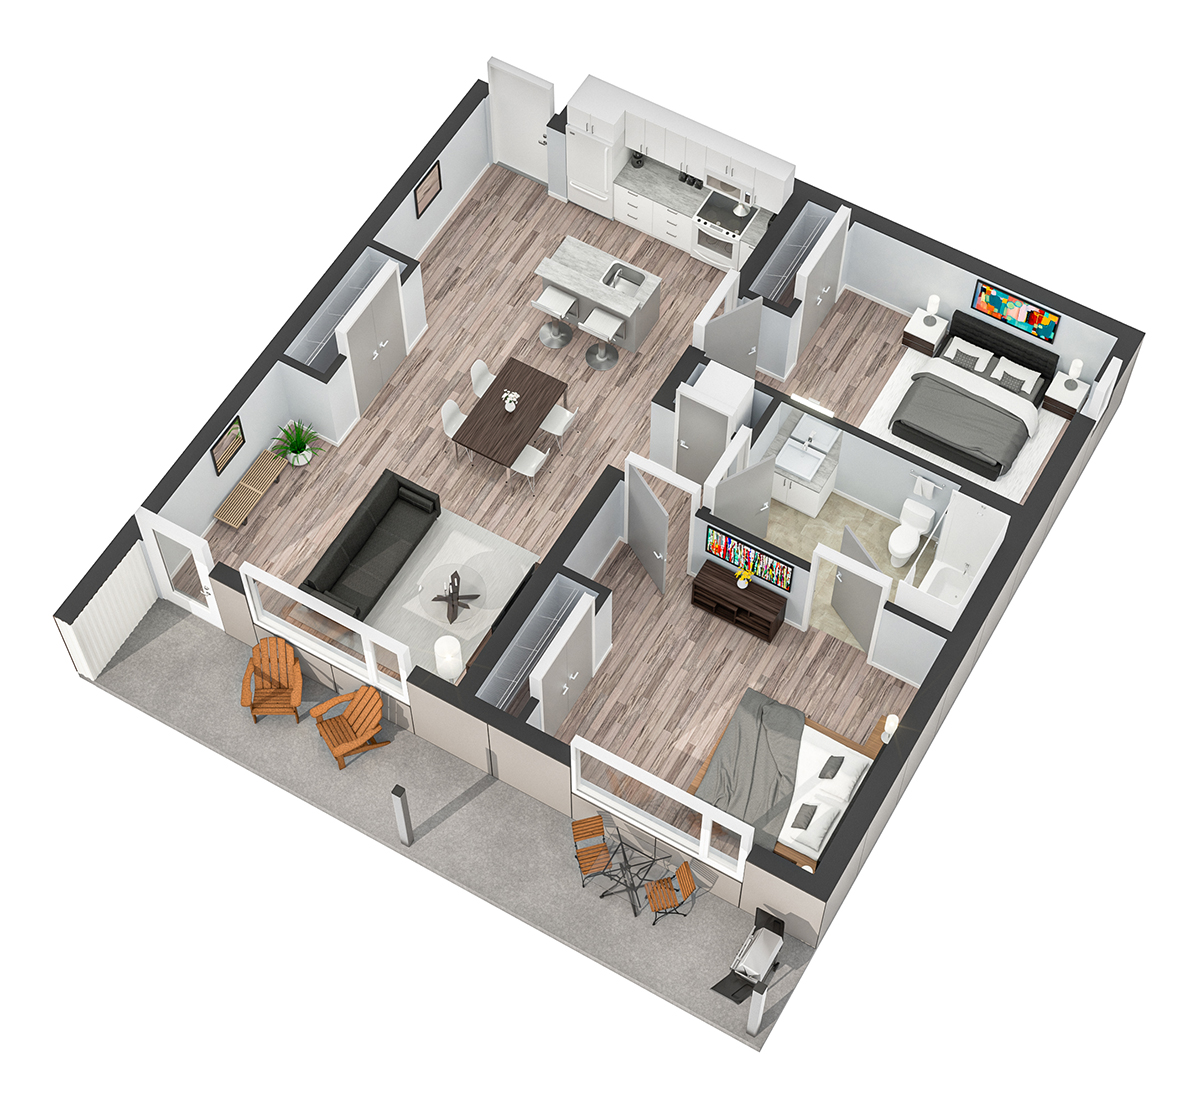 senior residential - accessibility living - universal design winnipeg